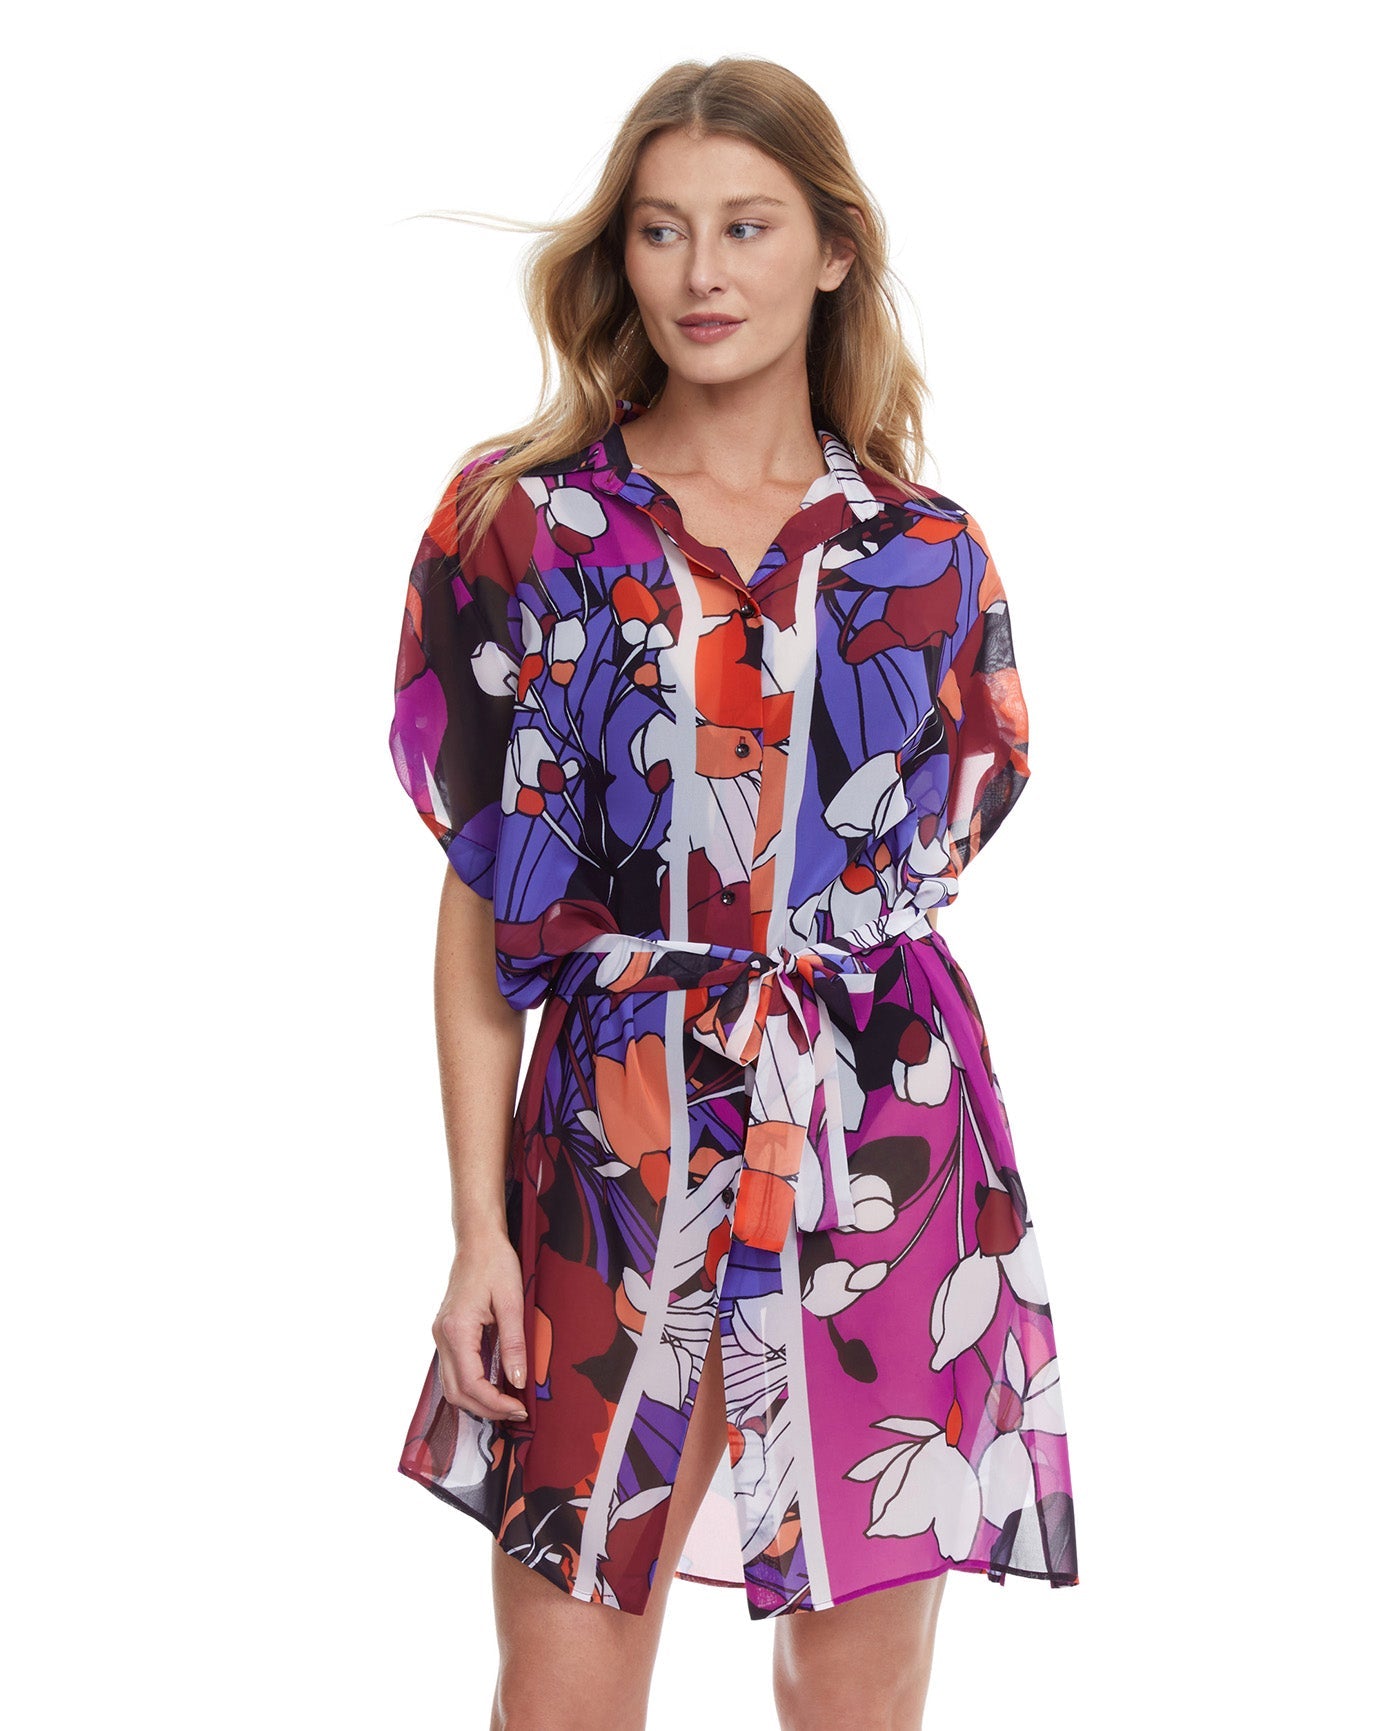 Front View Of Gottex Resortwear Floral Art Belted Cover Up Blouse Dress | Gottex Floral Art Plum